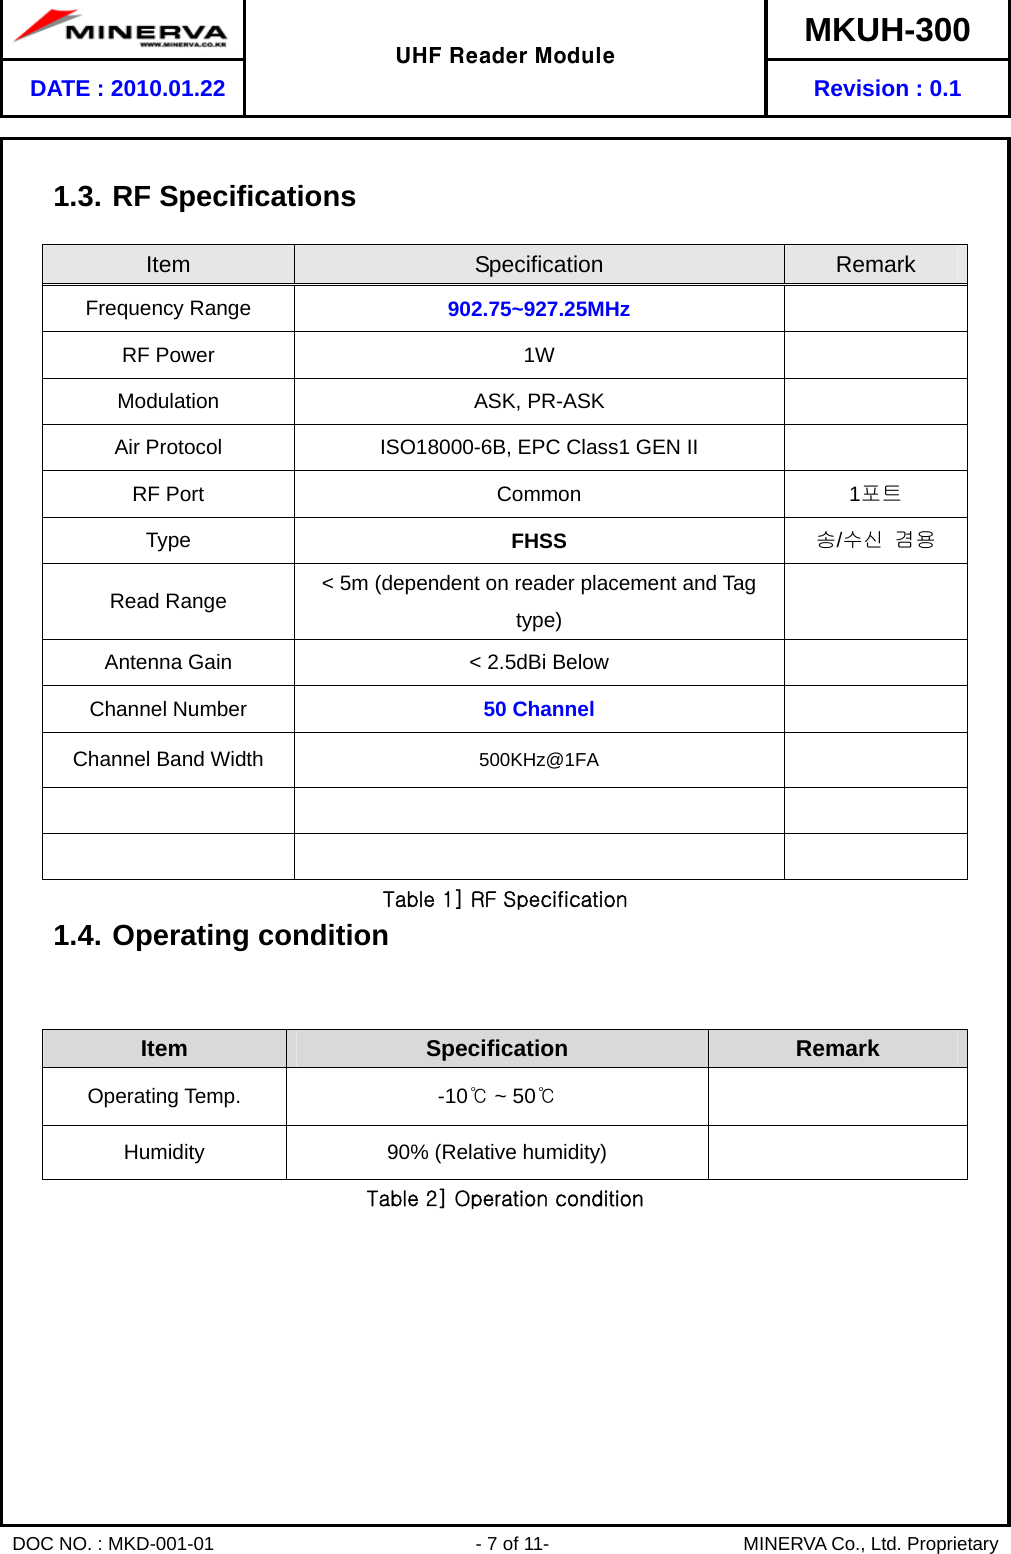 MINERVA MKUH-300 UHF RFID Reader User Manual 2010 02 11 FCC EnMenual R0 0